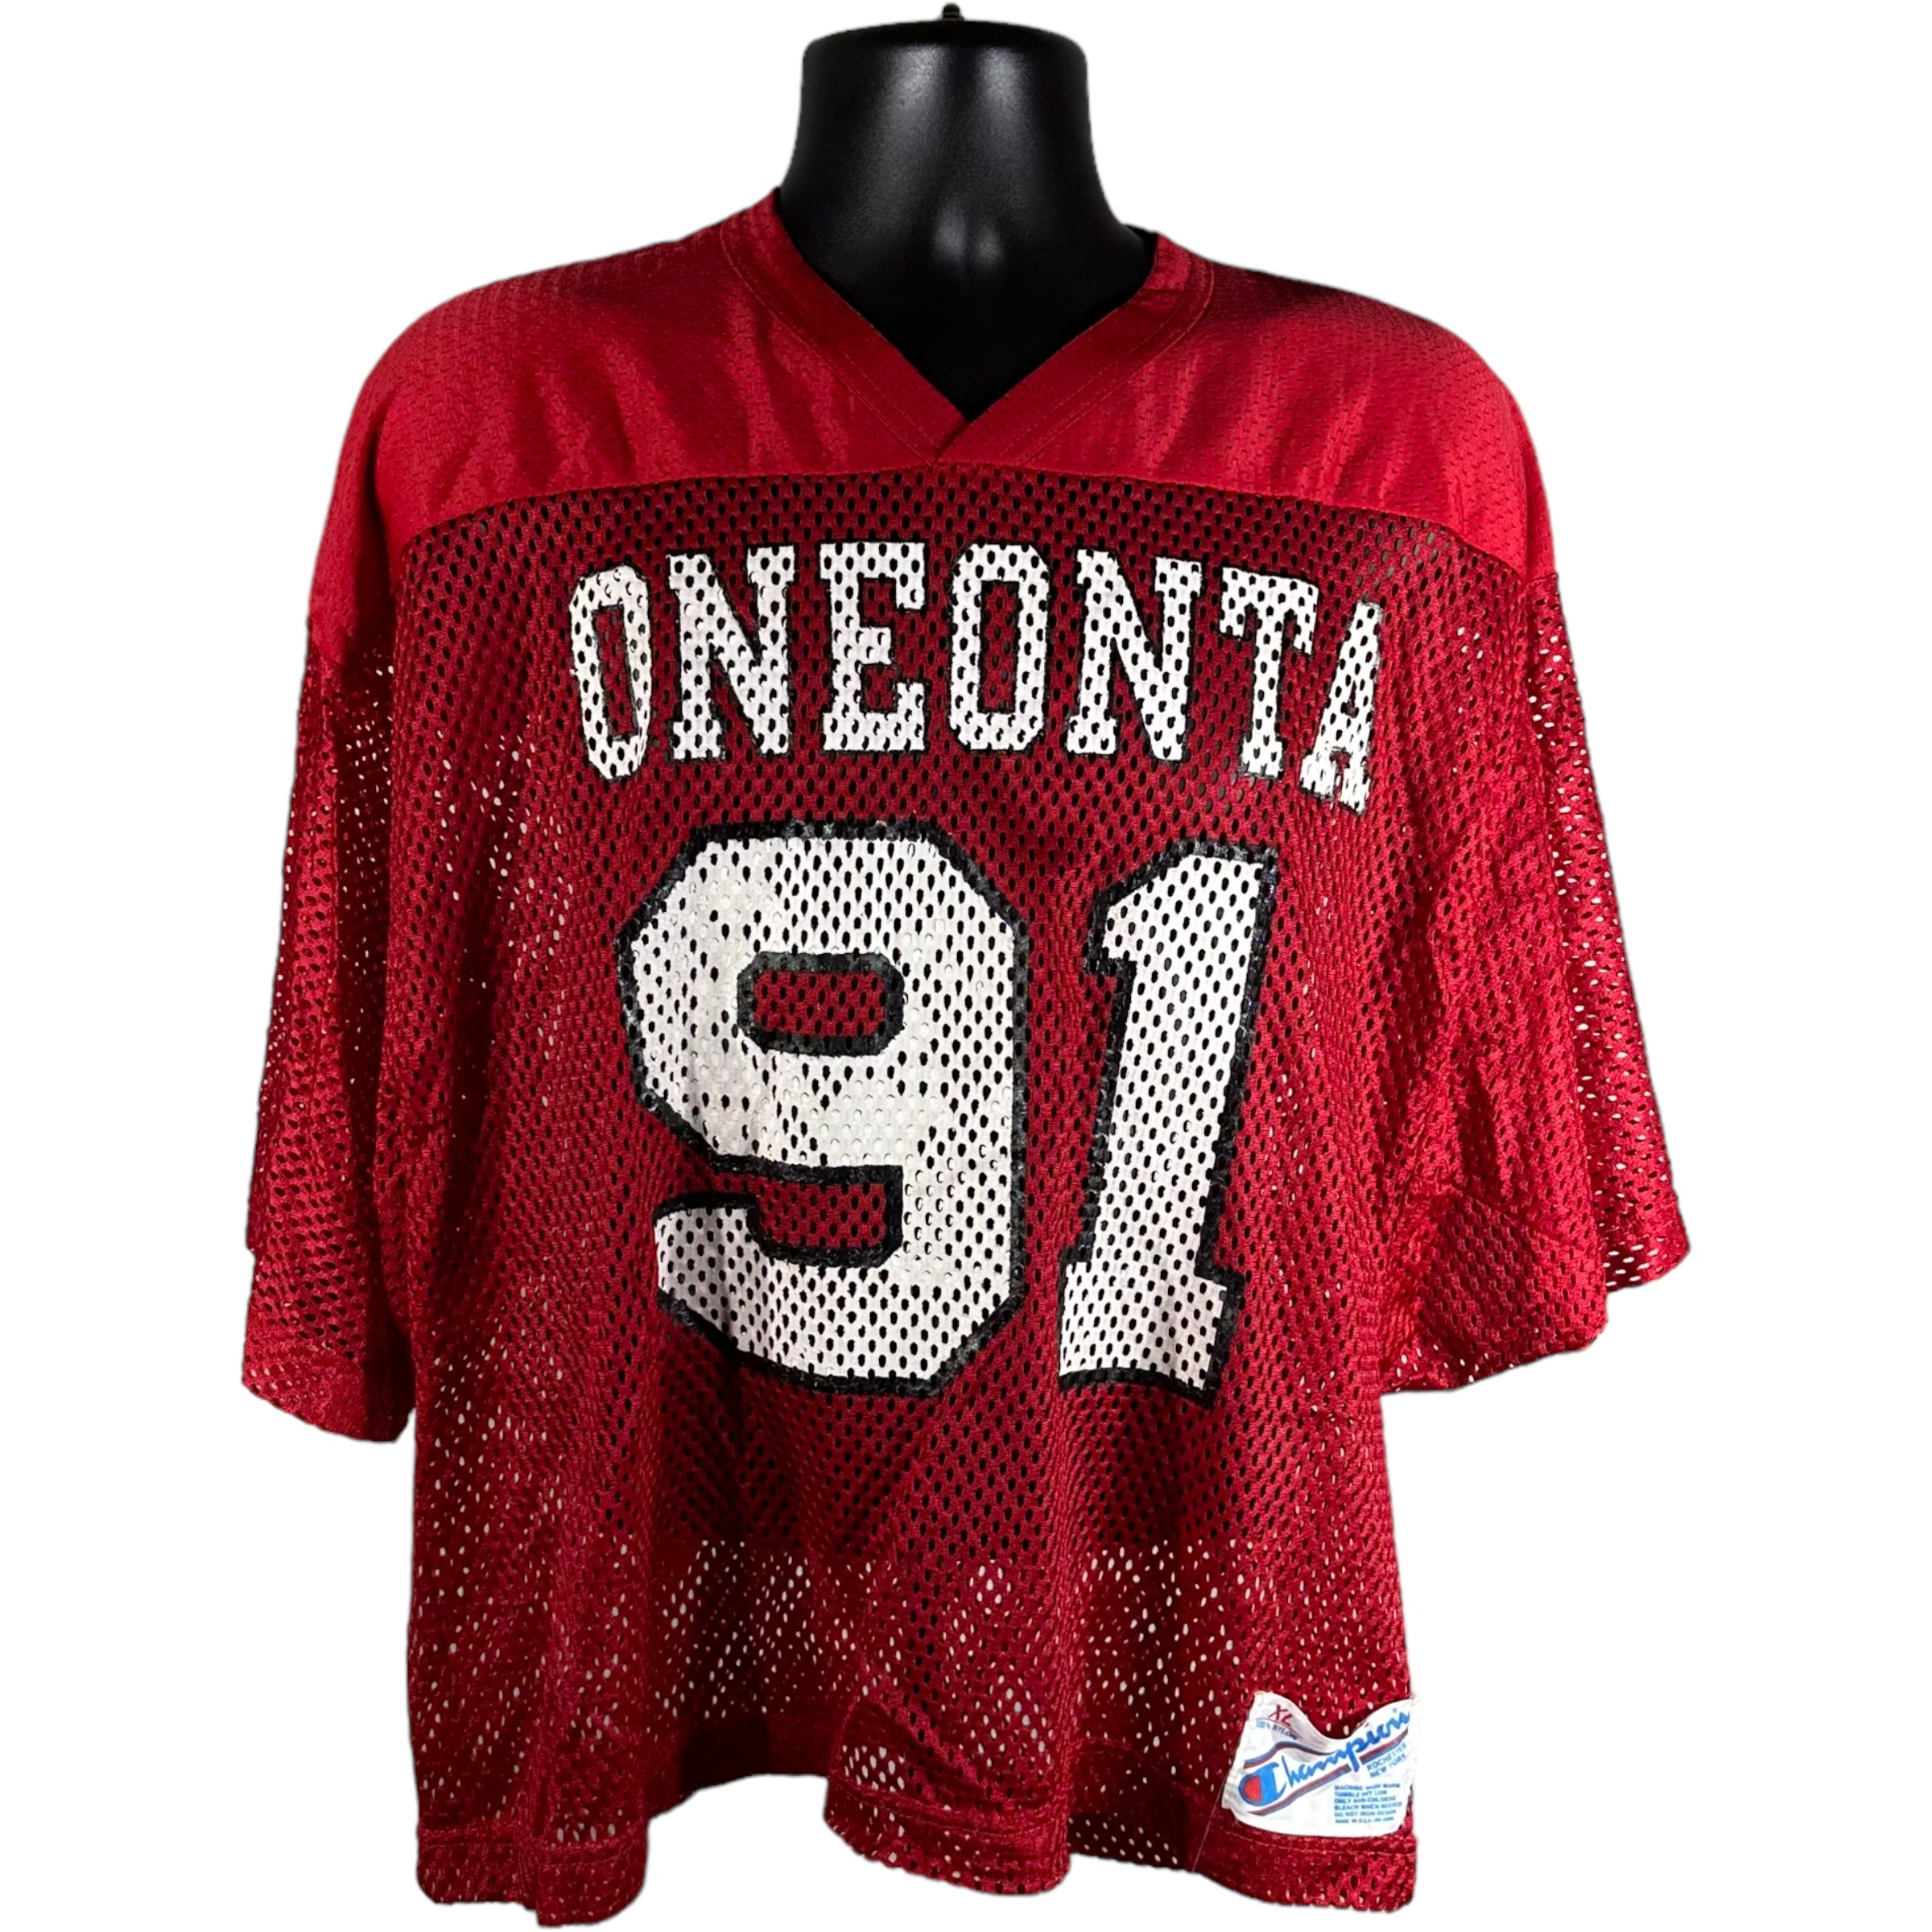 Vintage Oneonta #91 Champion Jersey